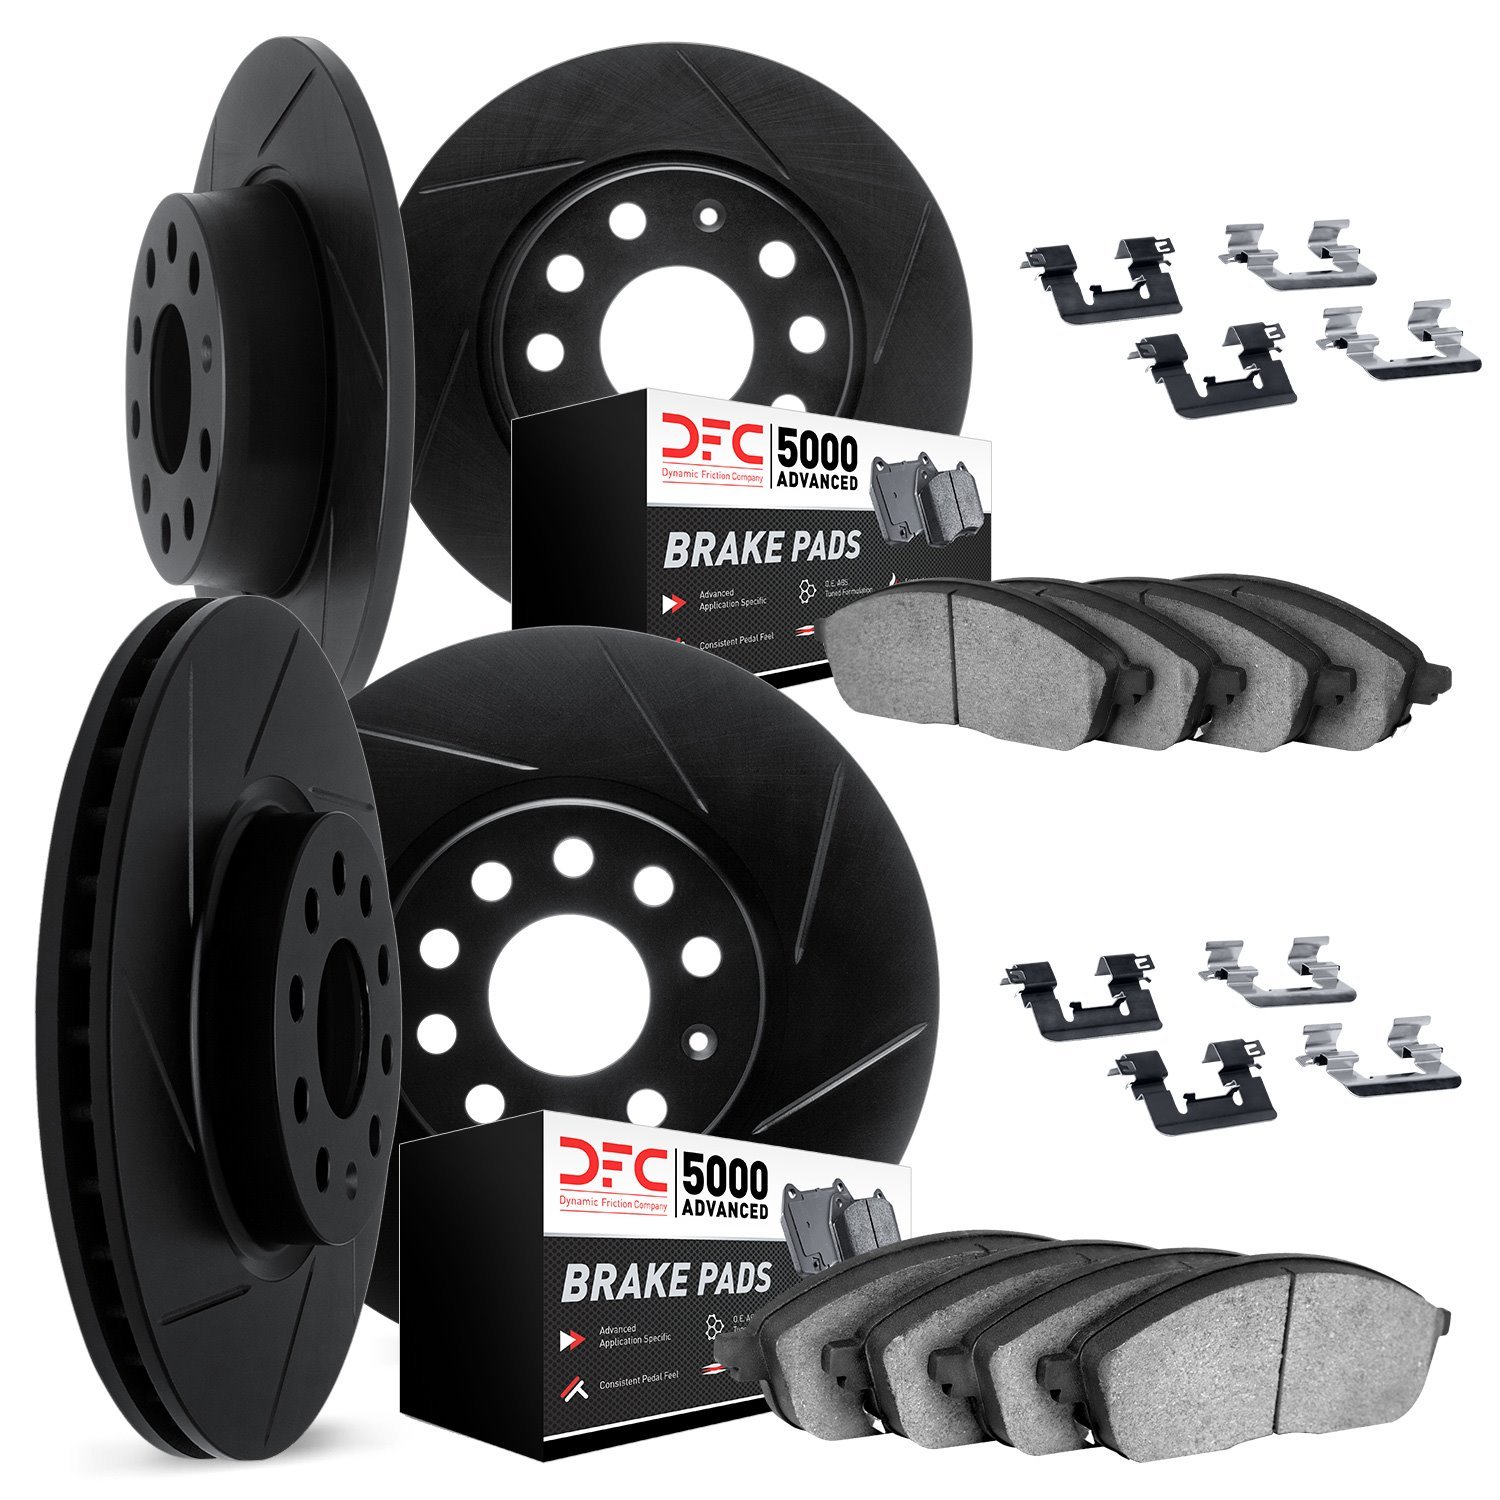 3514-42007 Slotted Brake Rotors w/5000 Advanced Brake Pads Kit & Hardware [Black], 2005-2010 Mopar, Position: Front and Rear